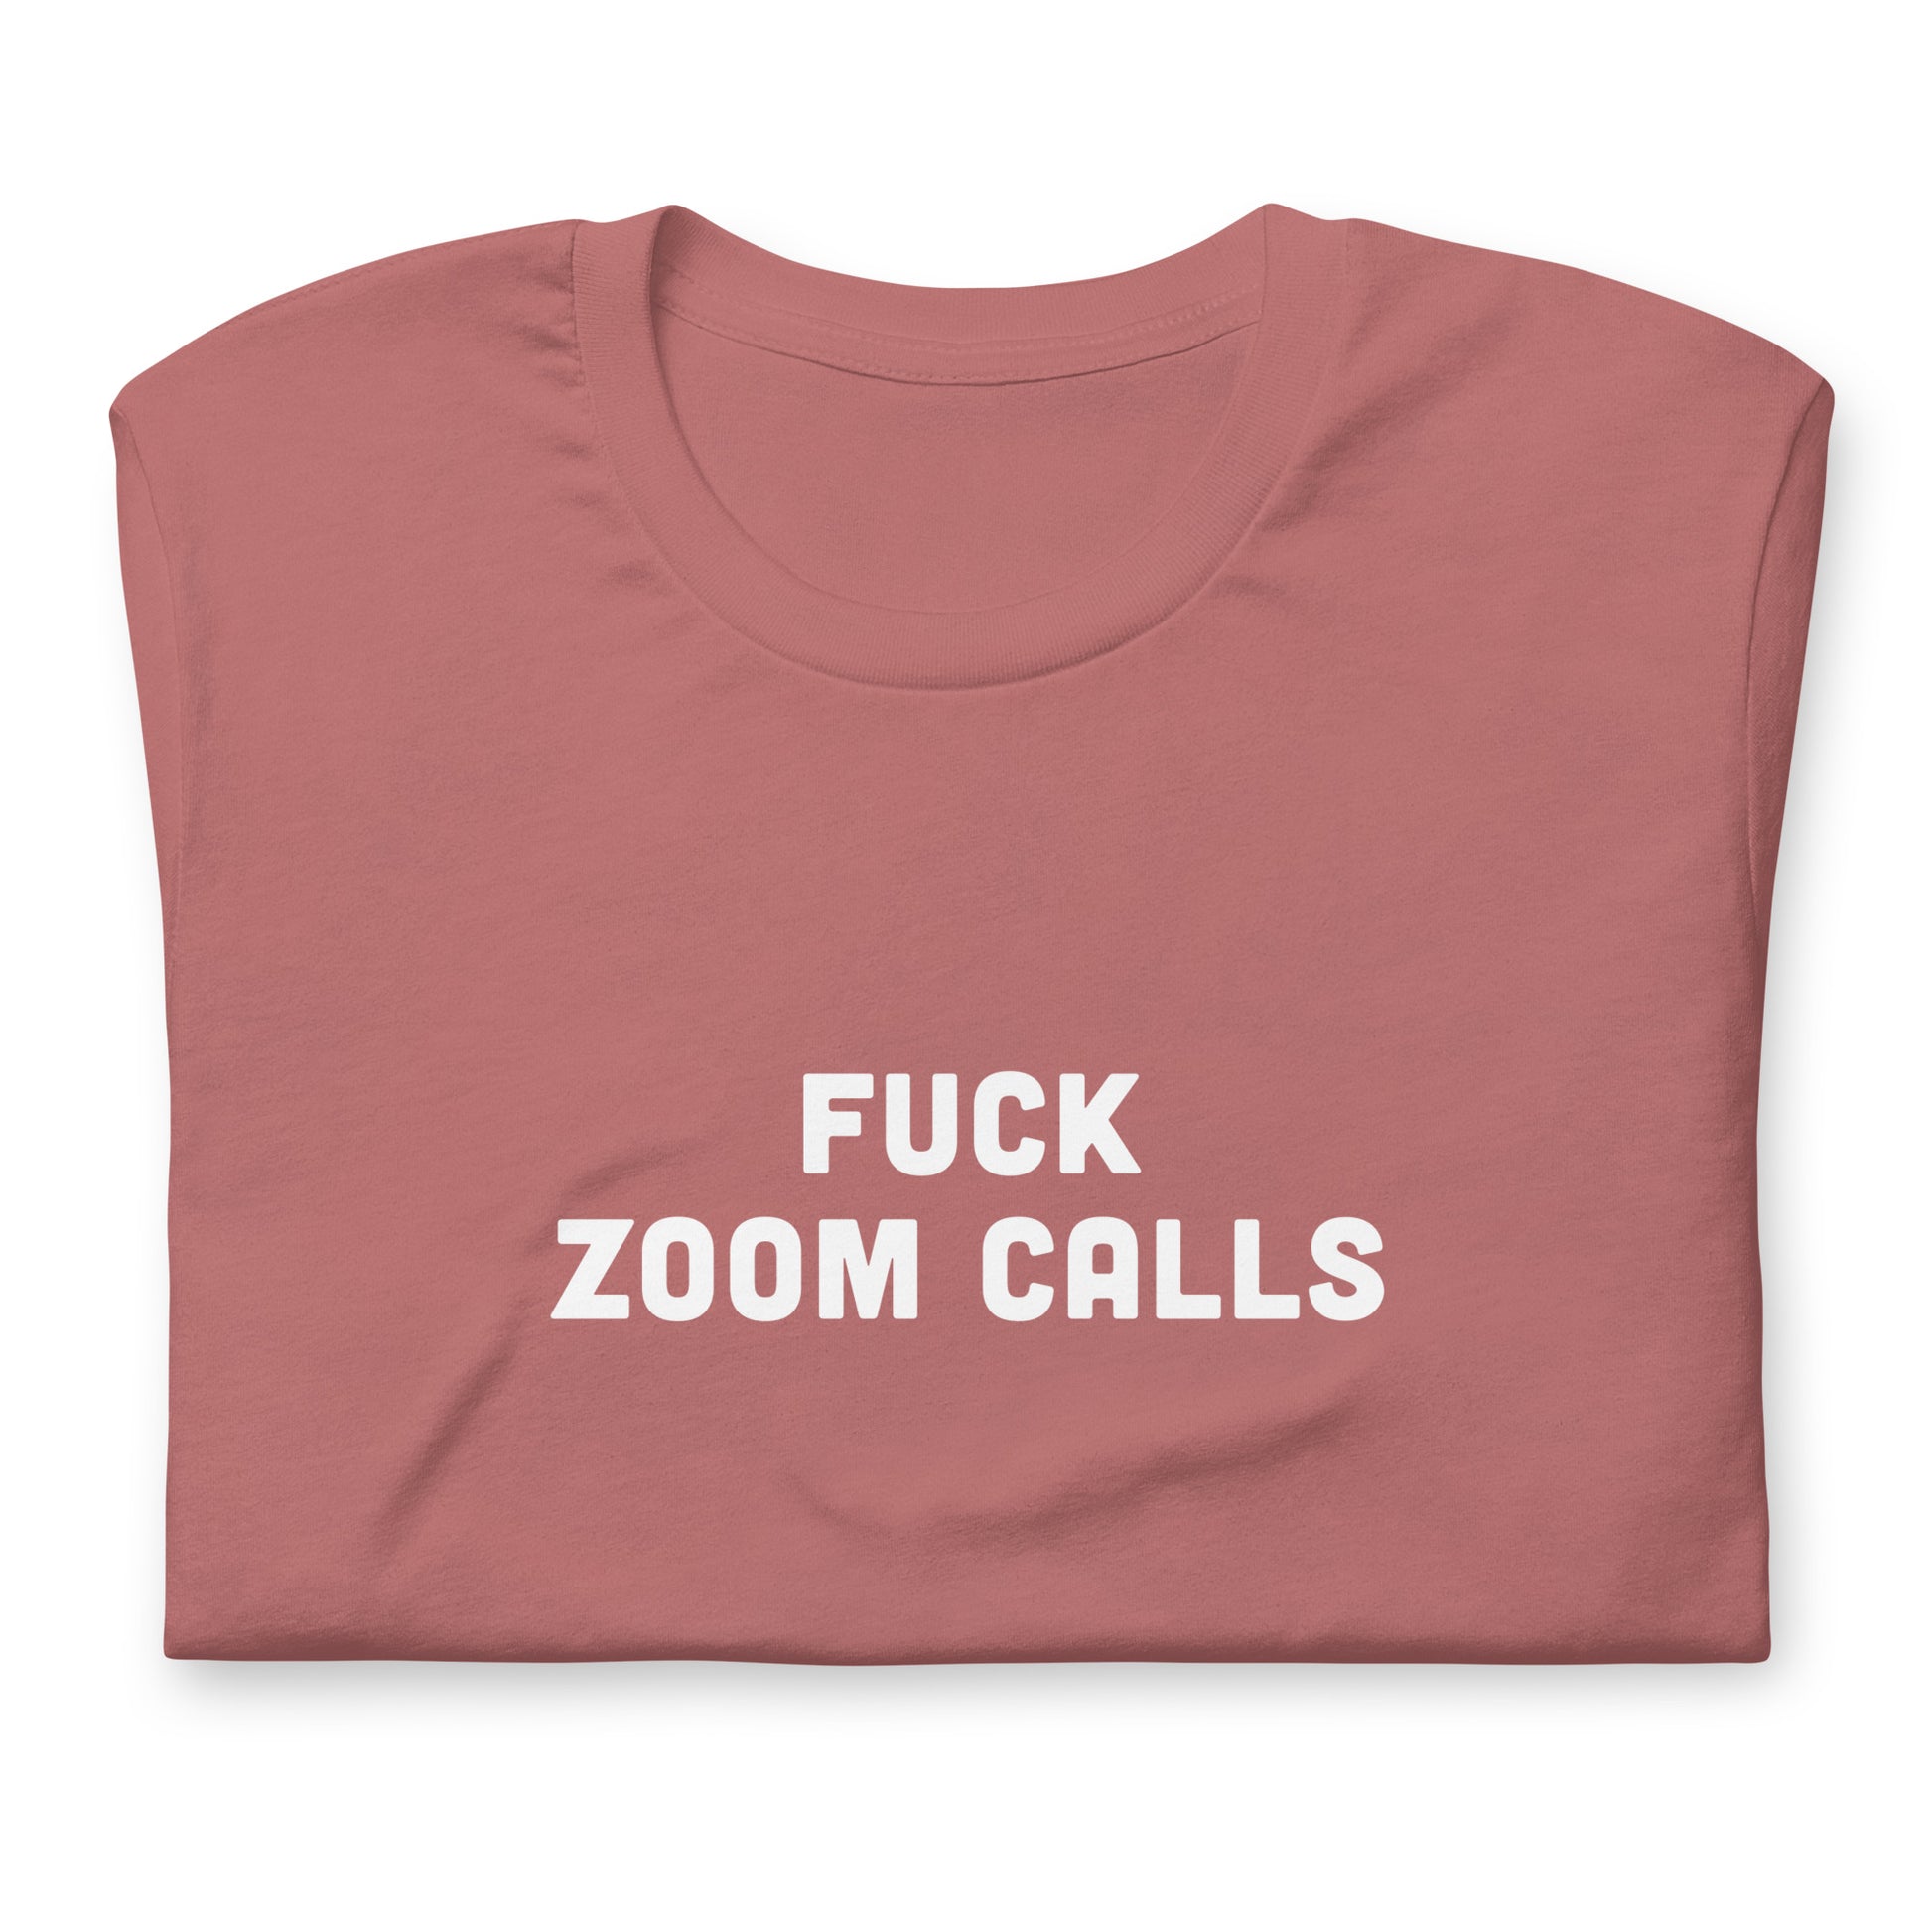 Fuck Zoom Calls T-Shirt Size XL Color Navy